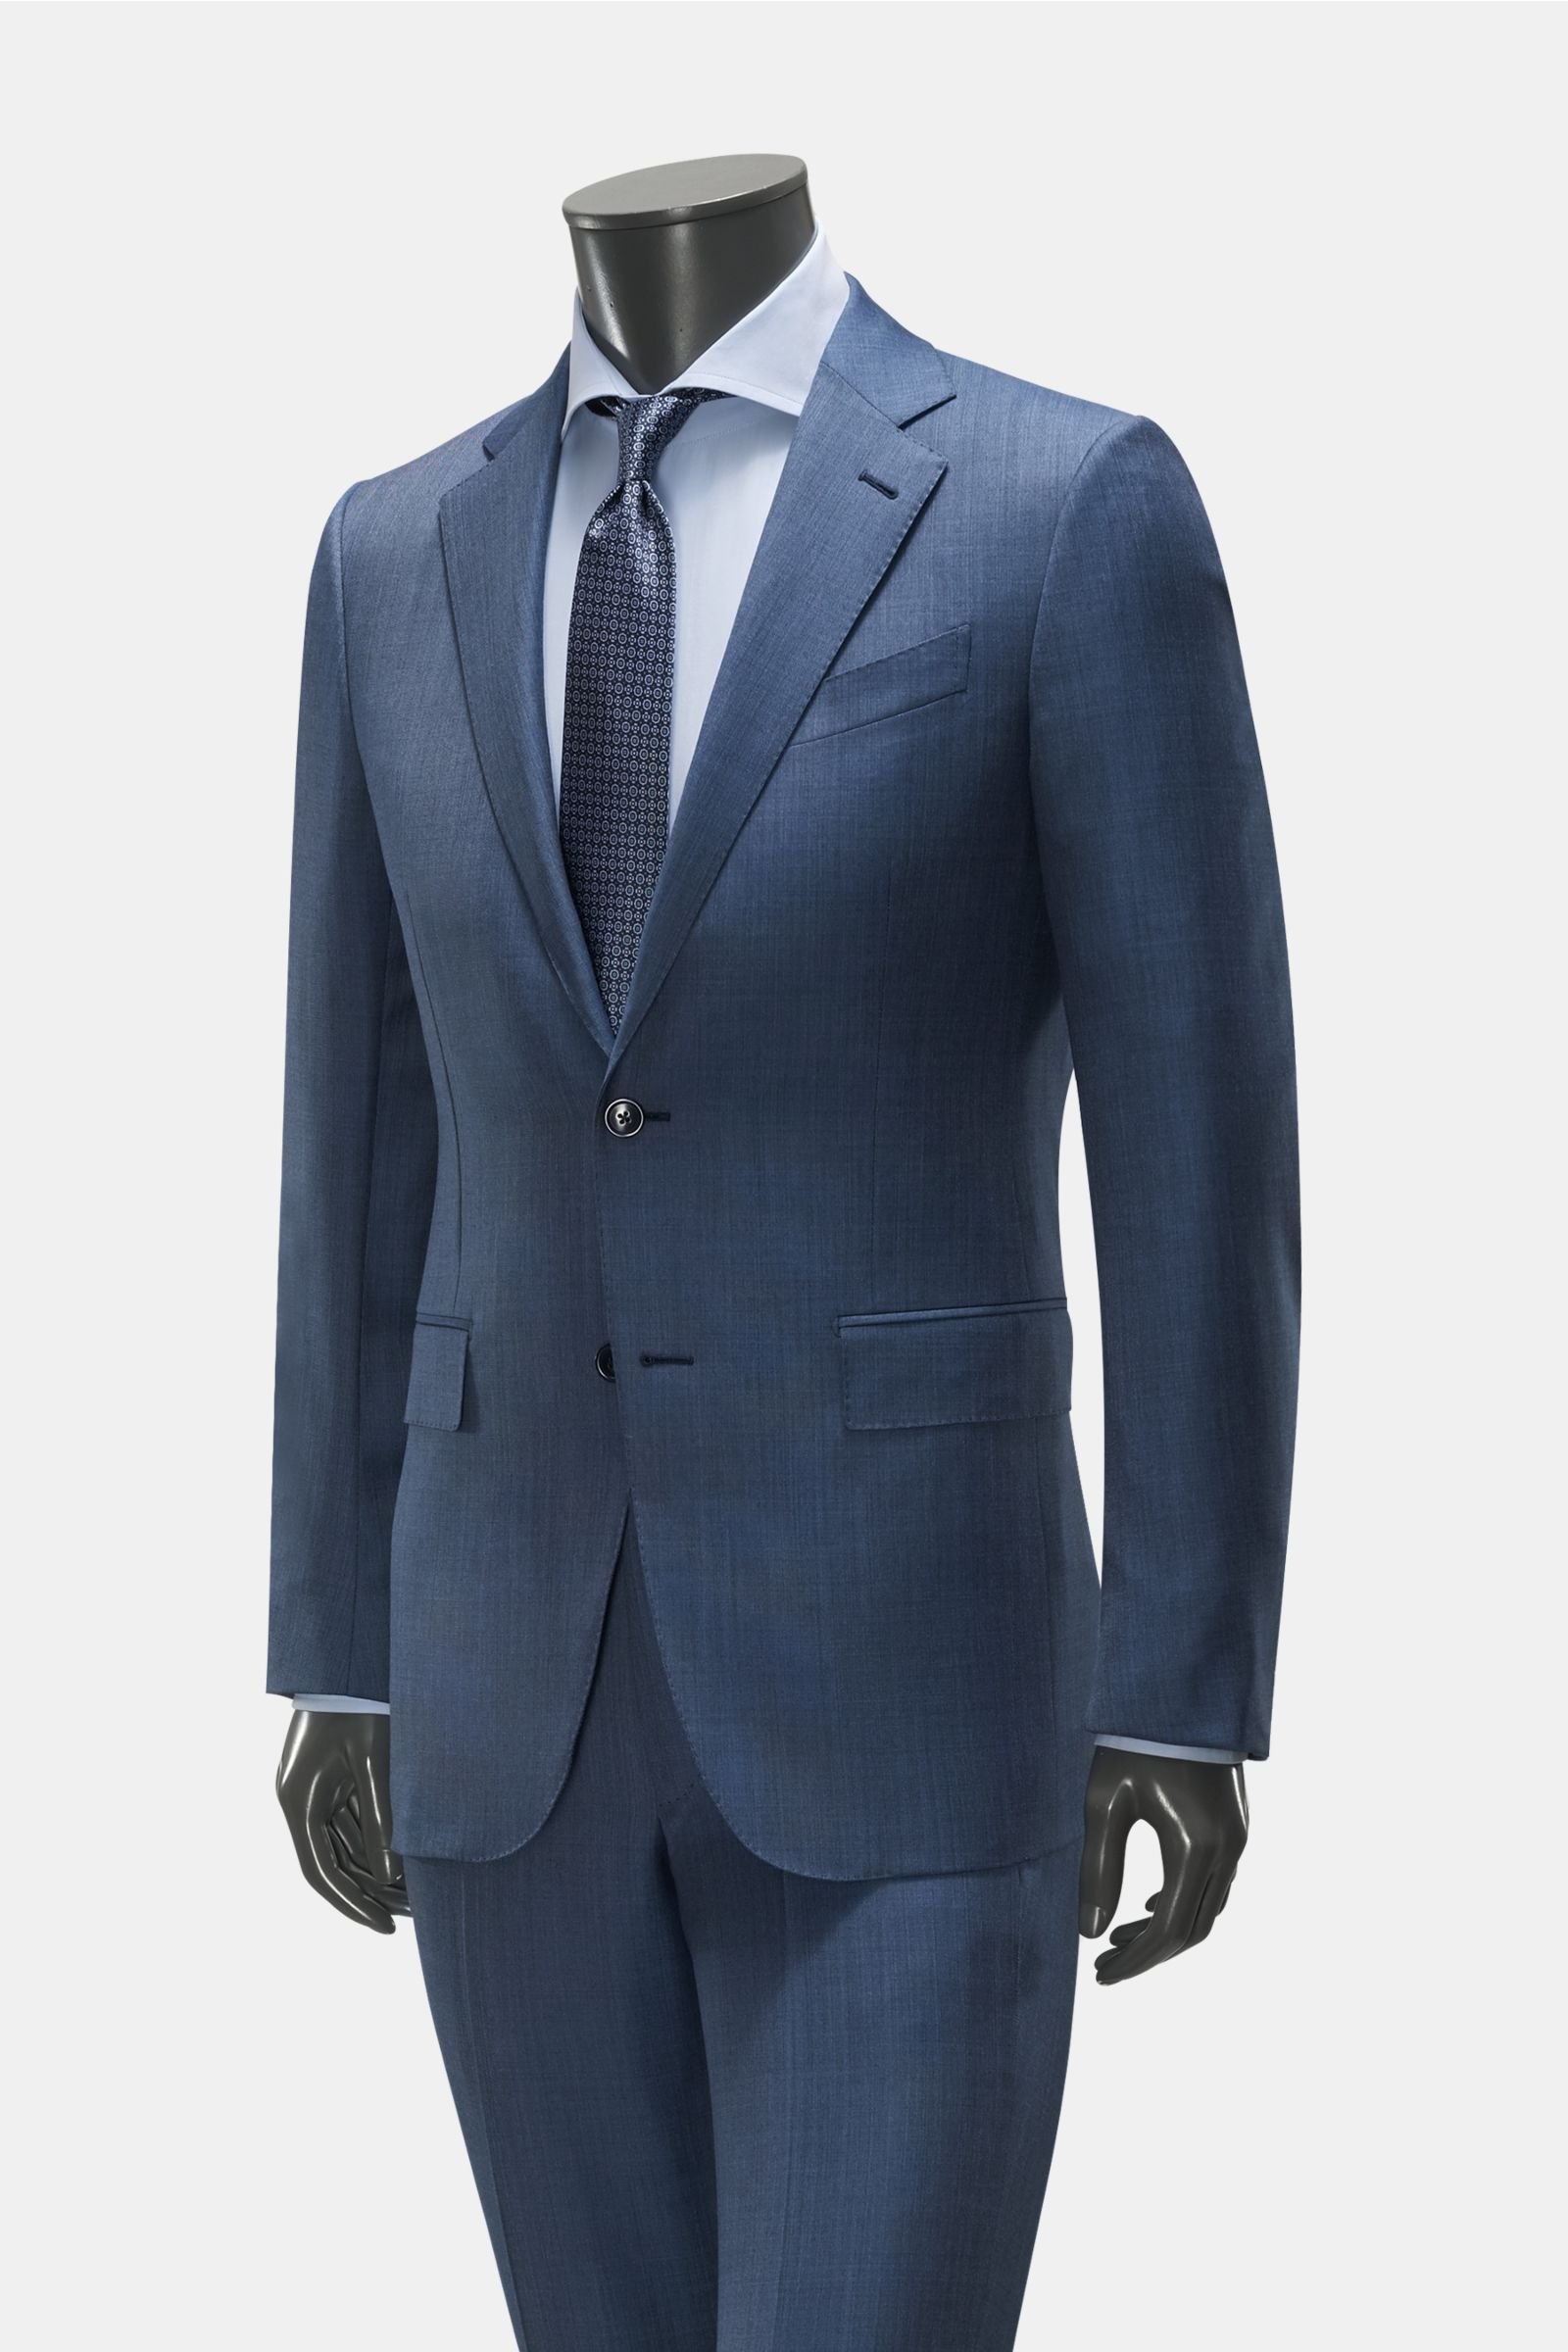 ERMENEGILDO ZEGNA suit 'Milano' smoky blue | BRAUN Hamburg